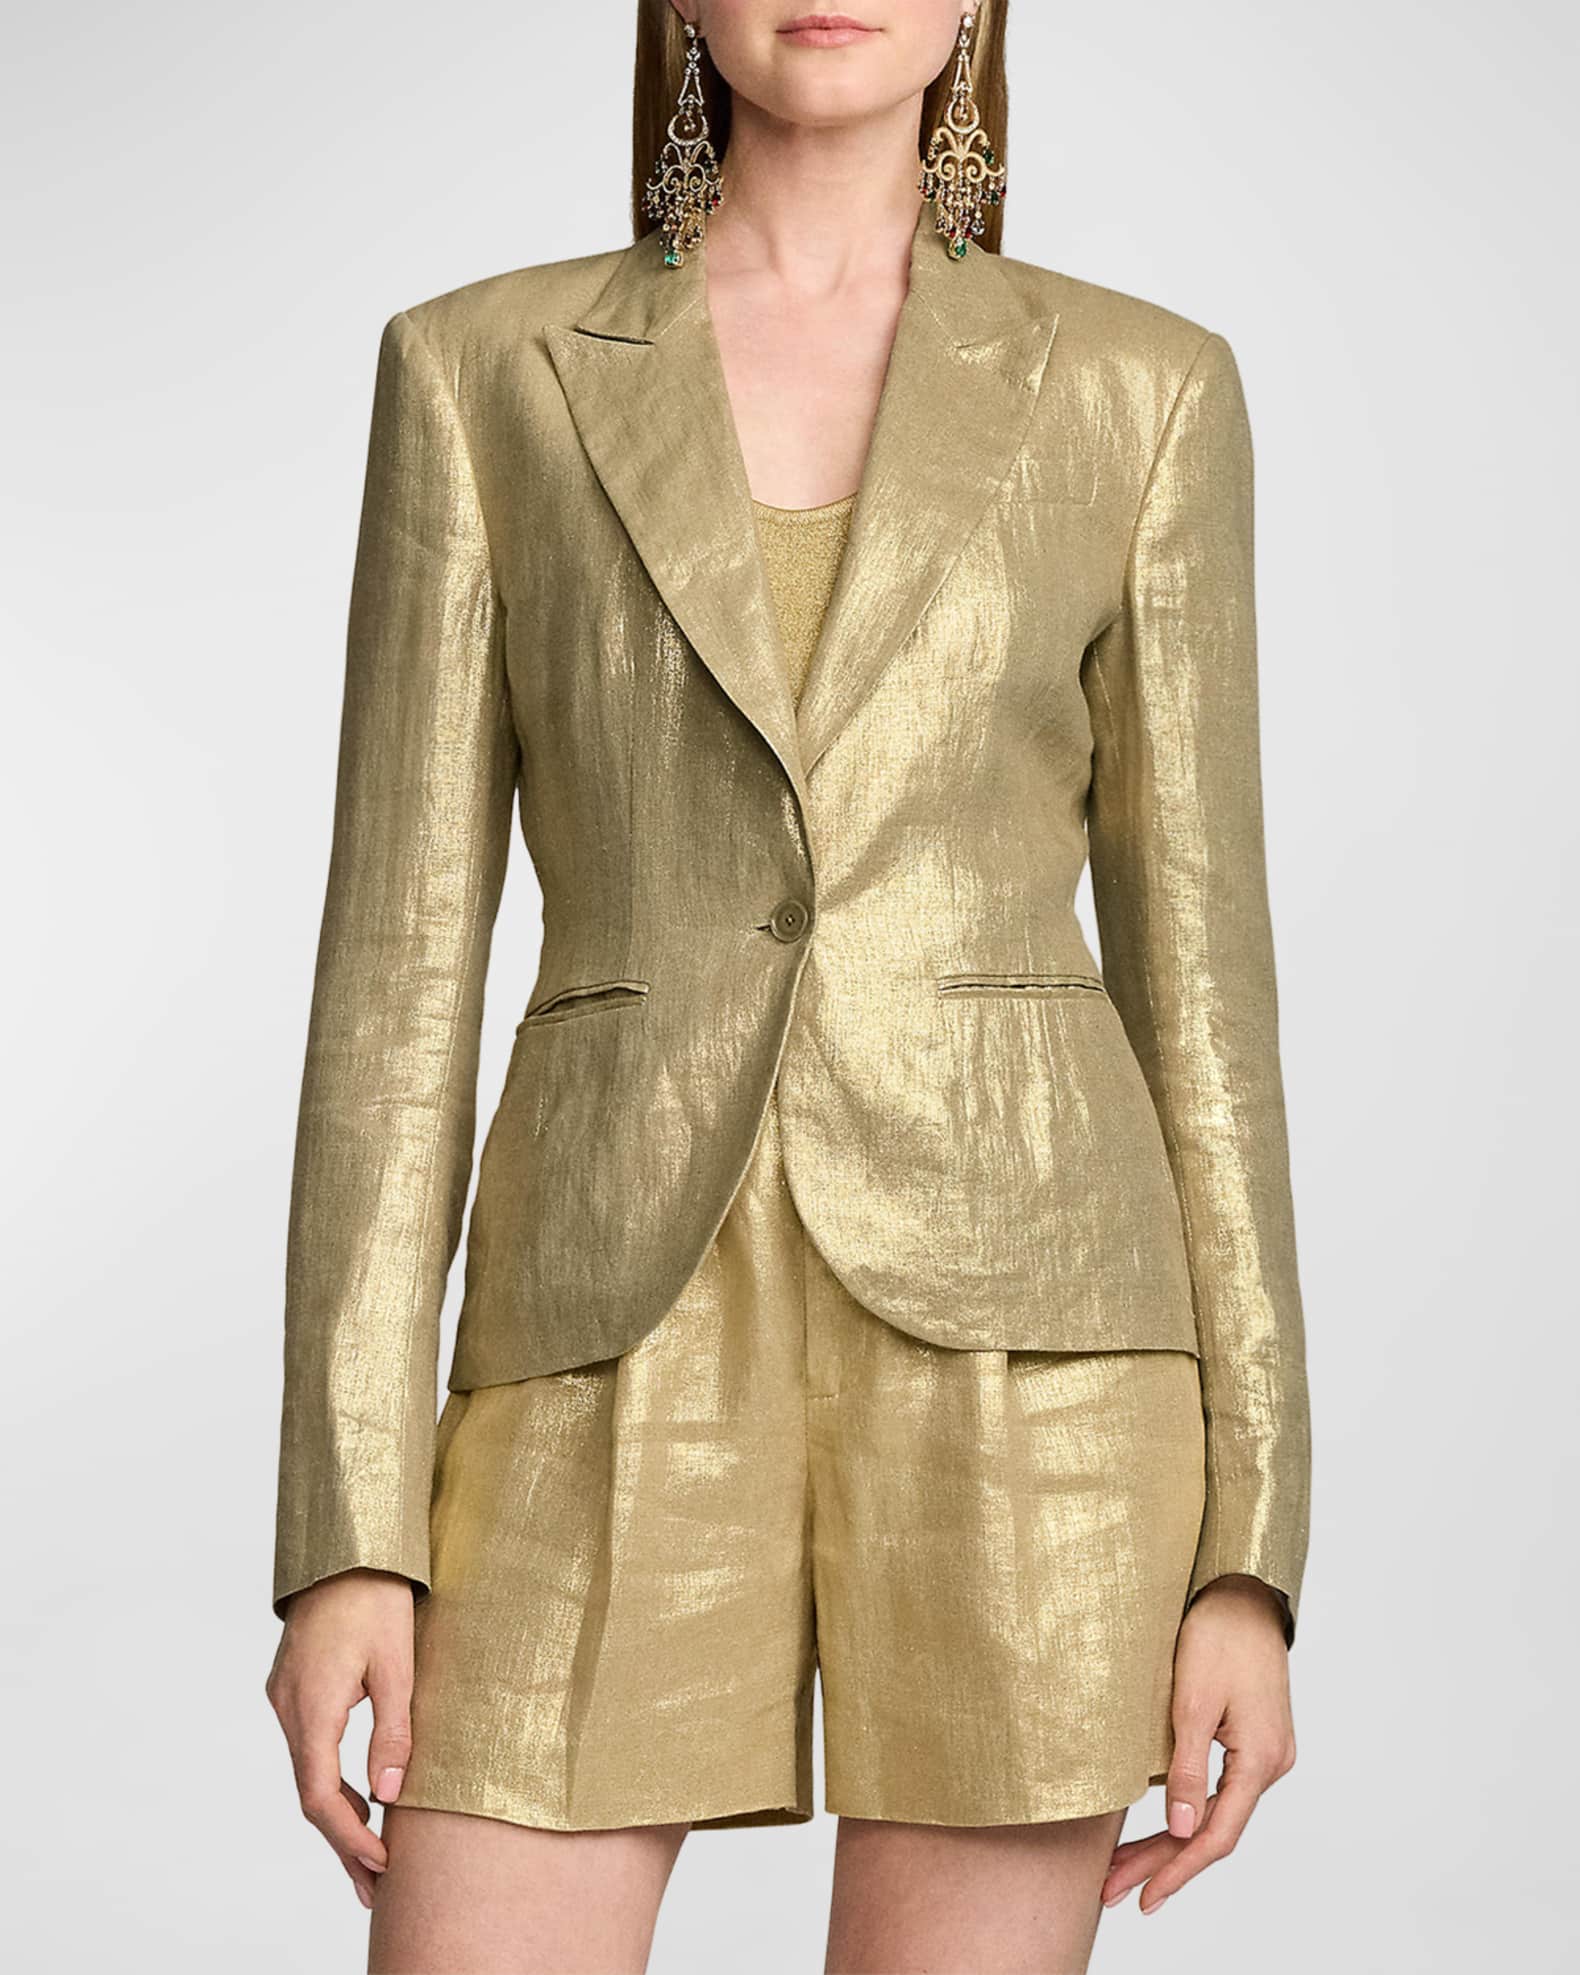 Ralph Lauren Collection Aaiden Foiled Linen Single-Breasted Blazer Jacket, Yellow, Women's, 10, Coats Jackets & Outerwear Blazers